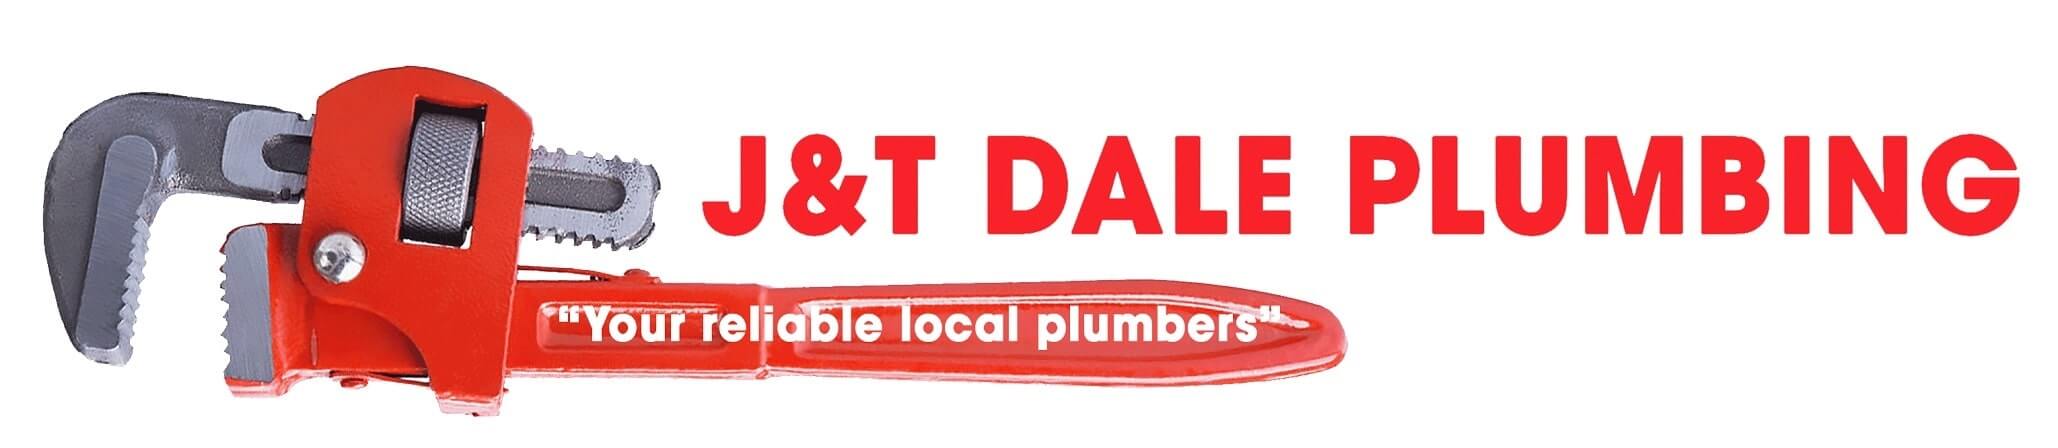 J&T Dale Plumbing